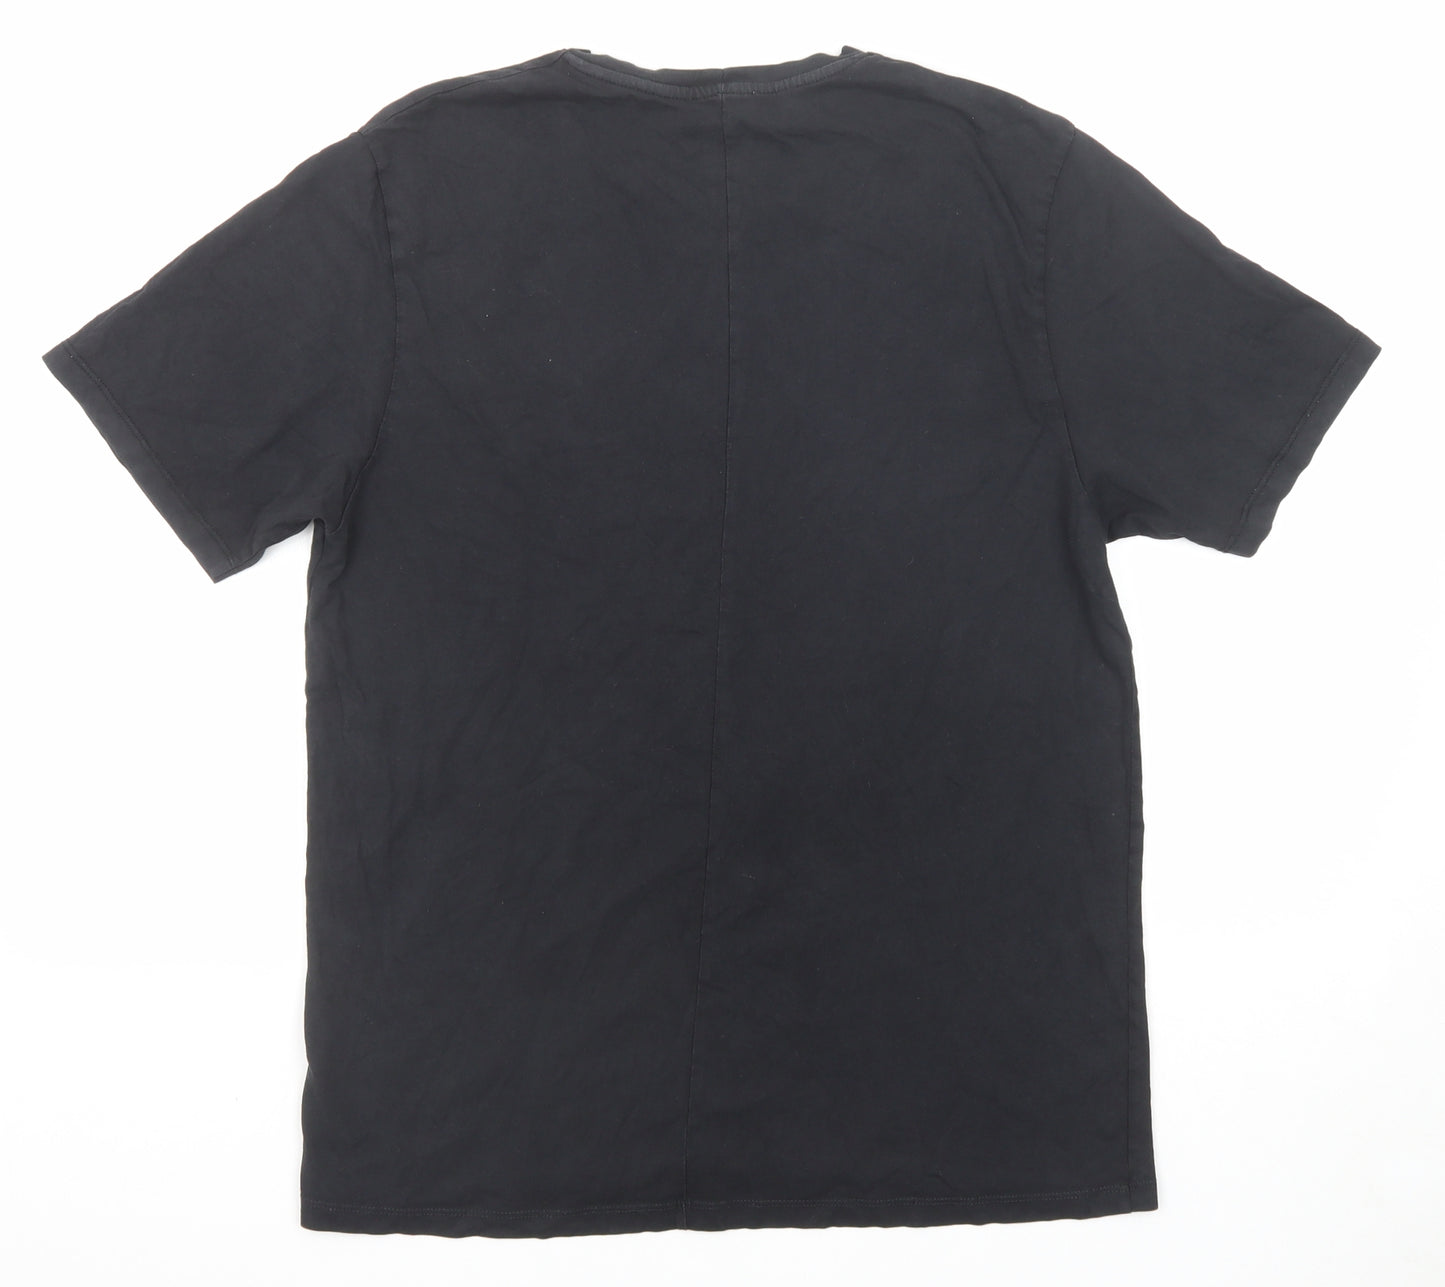 Topman Mens Black Cotton T-Shirt Size L Round Neck - Dark Skies